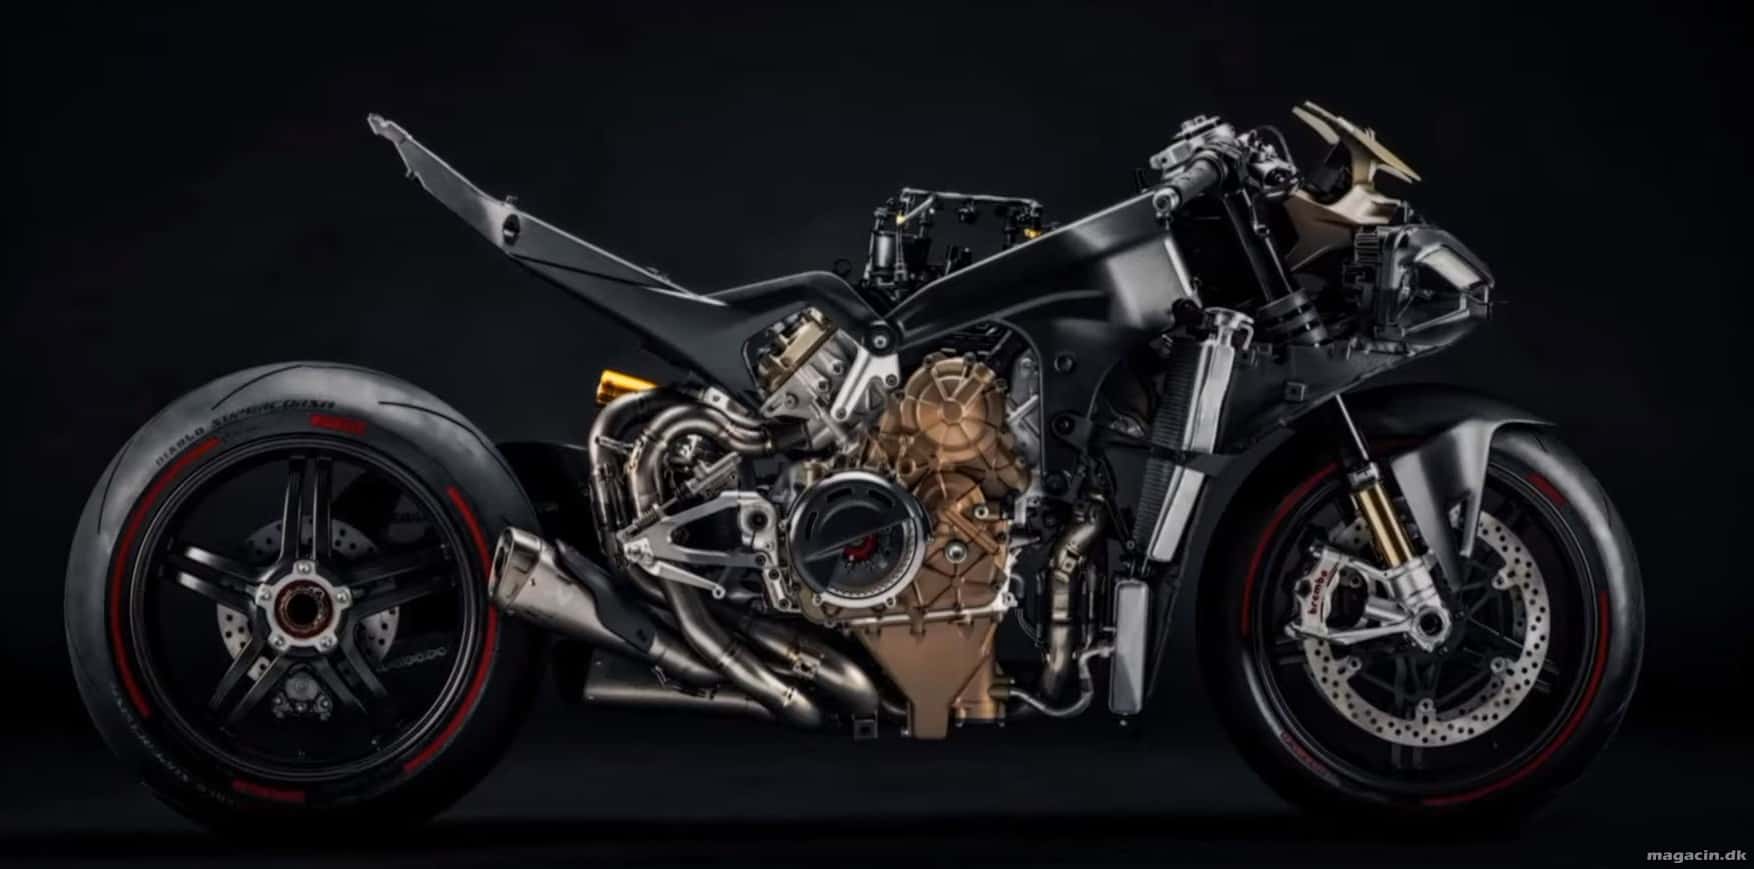 Video #2: Ducati Panigale V4SL